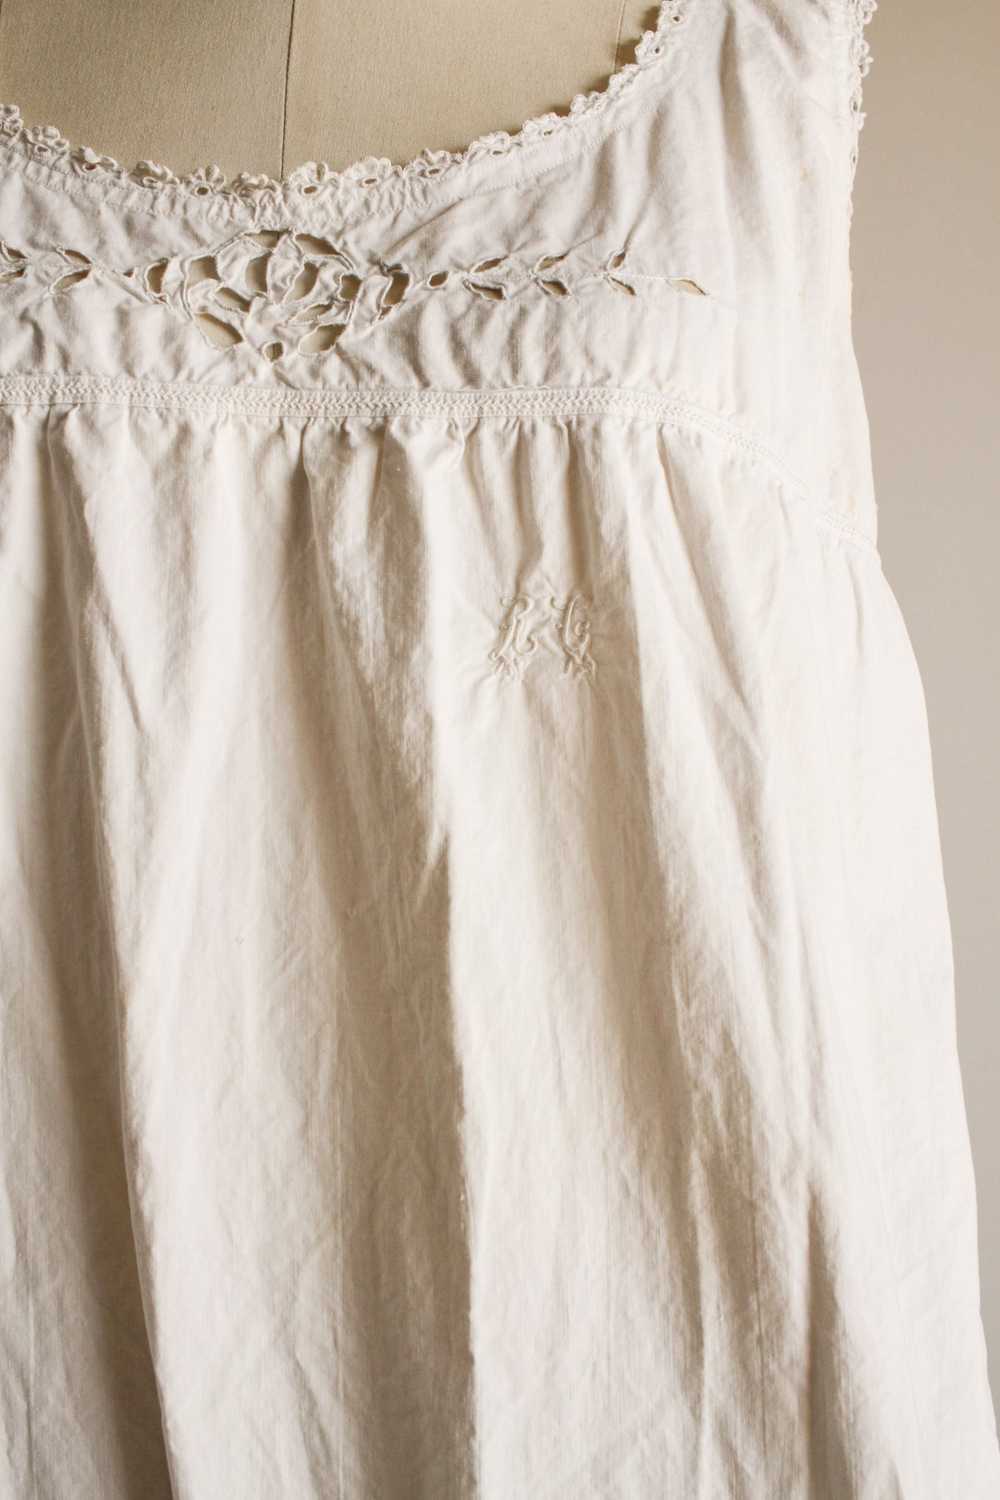 Victorian White Cotton Rosette Night Dress - image 3